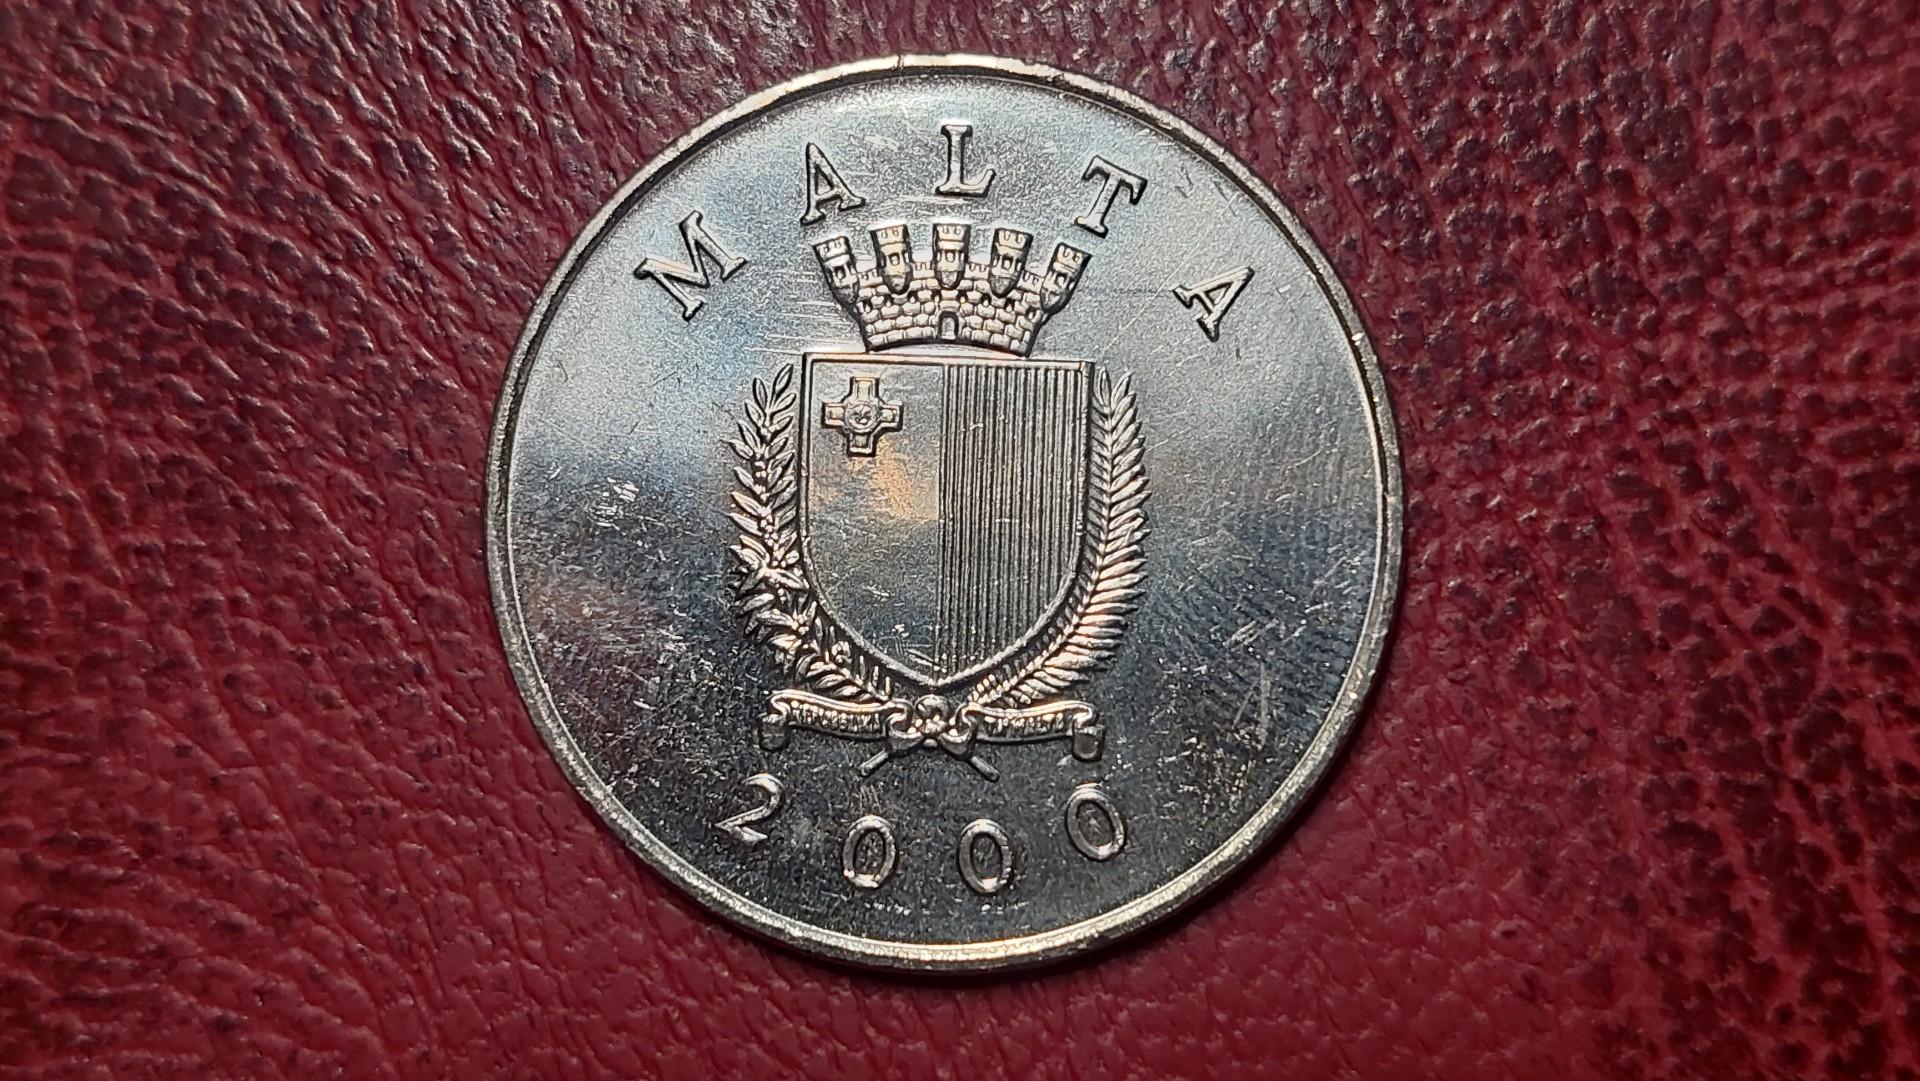 Malta 1 lira, 2000 KM# 99